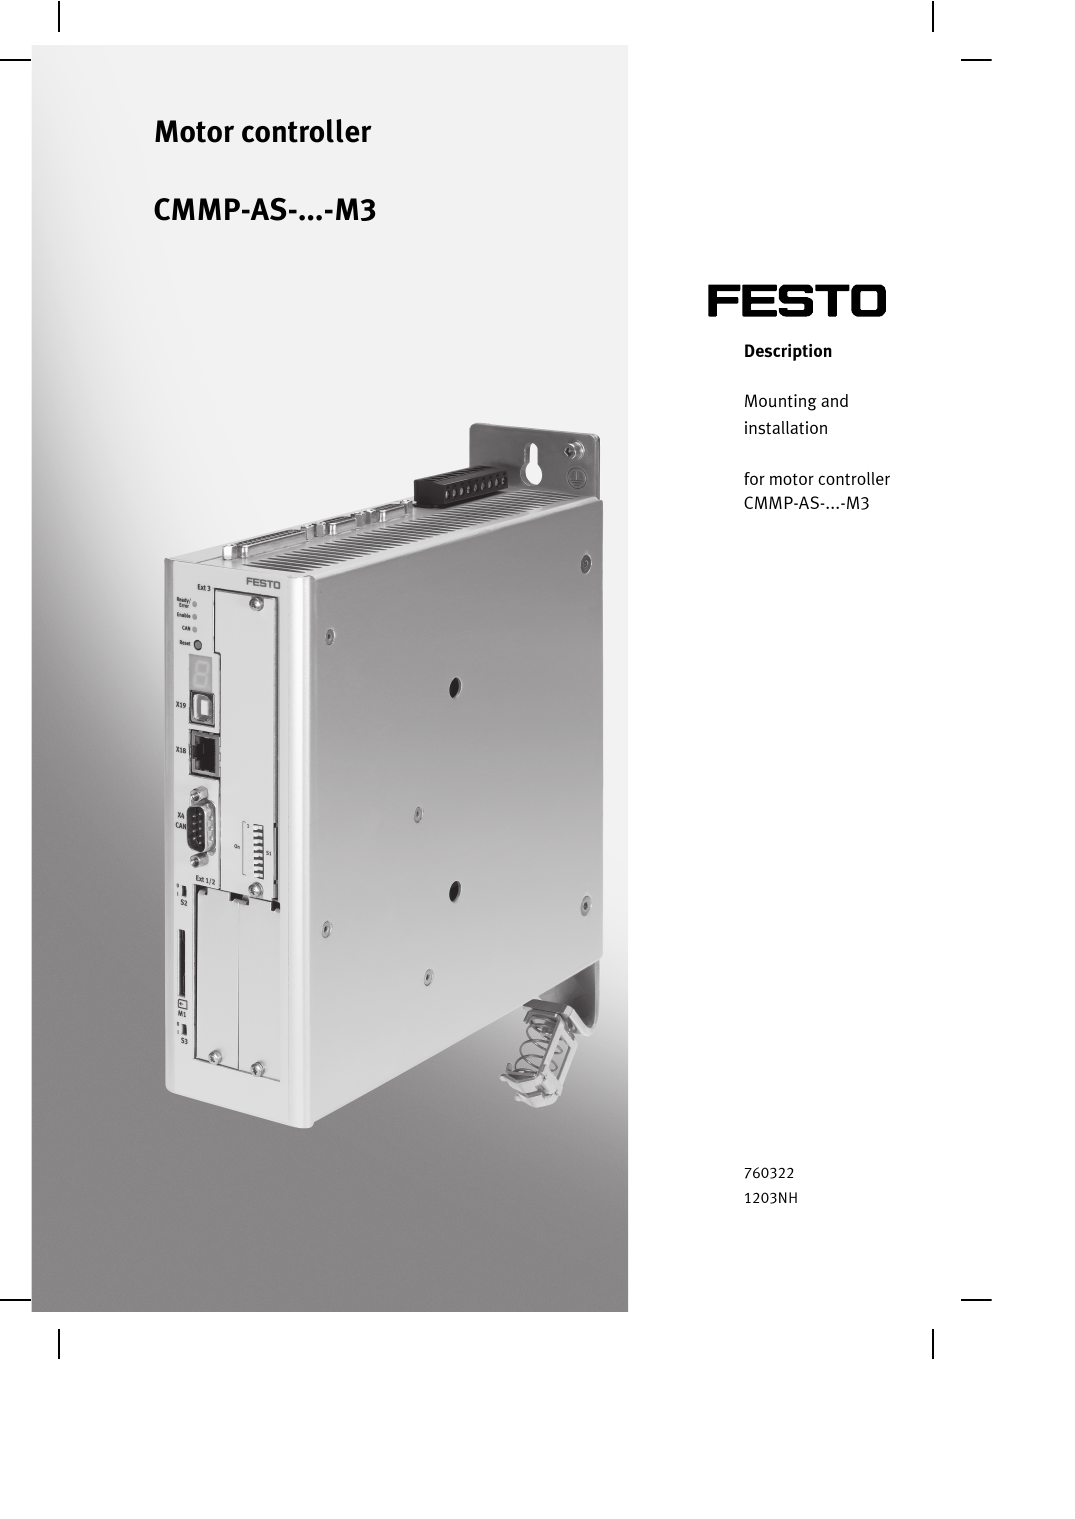 Festo 1501328 Model CMMP-AS-C10-11A-P3-M3 Motor Controller